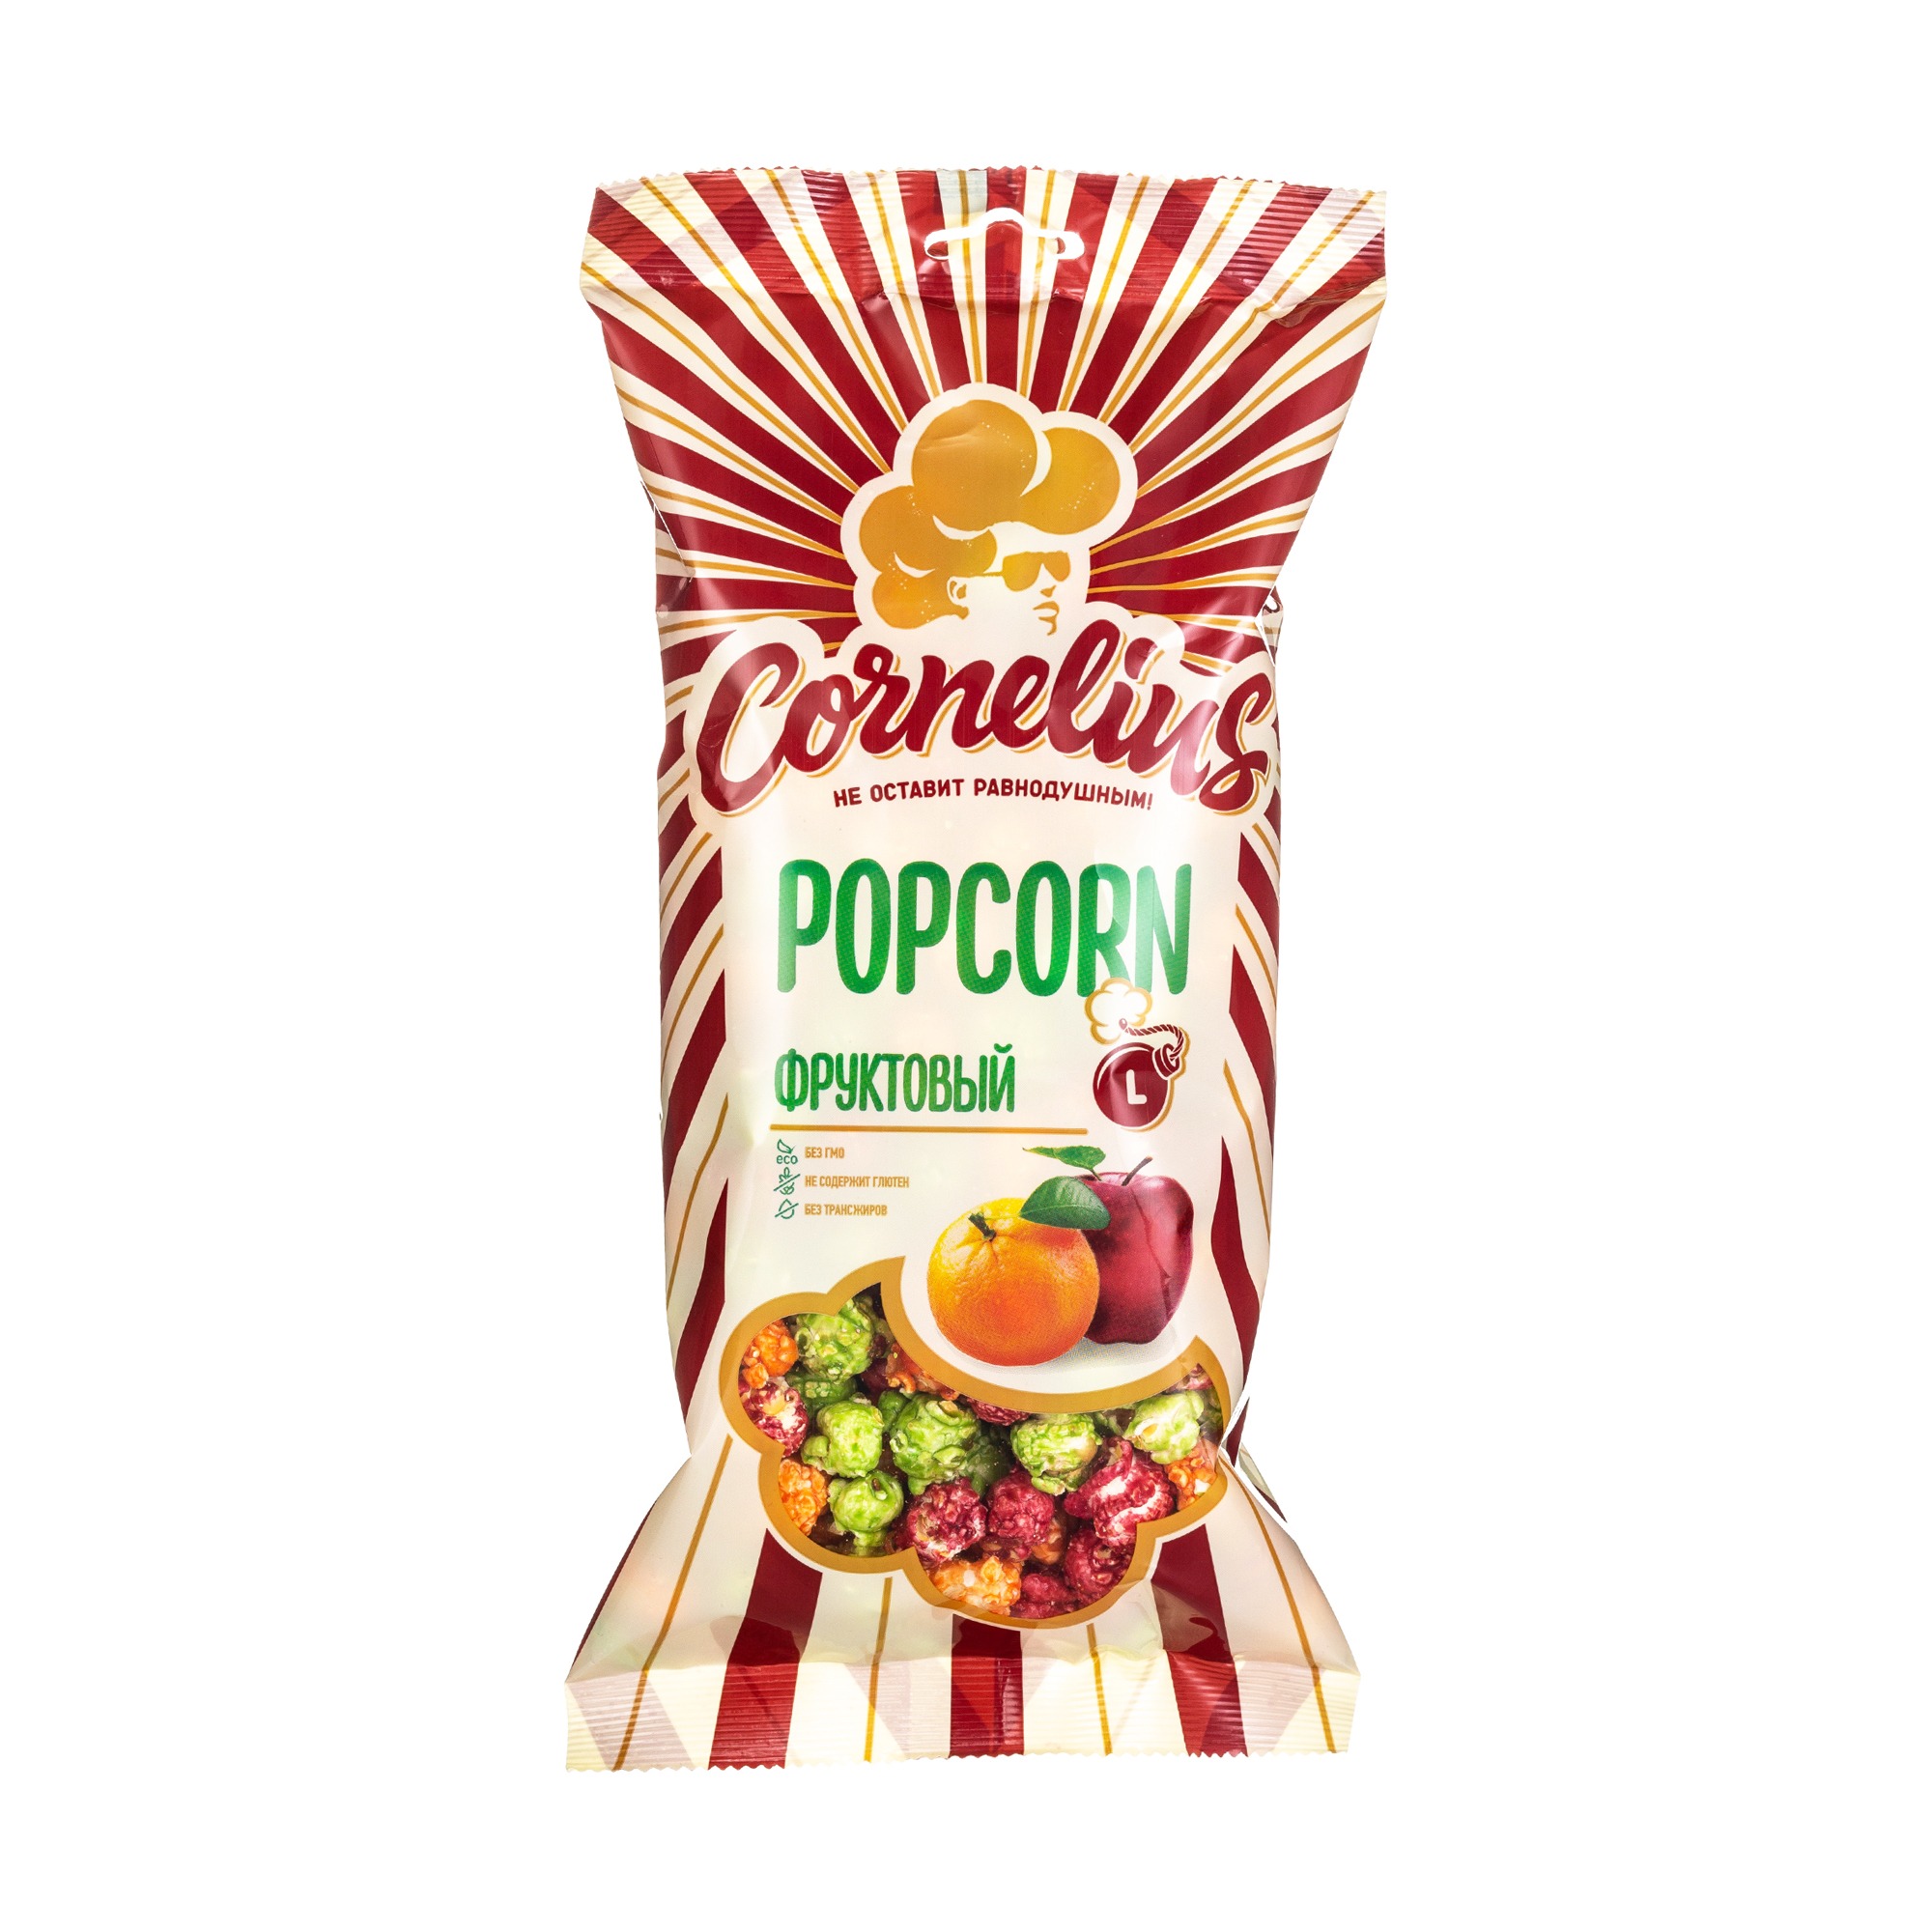 Попкорн Cornelius фруктовый, 200 г попкорн royal premium фруктовый микс 160 г